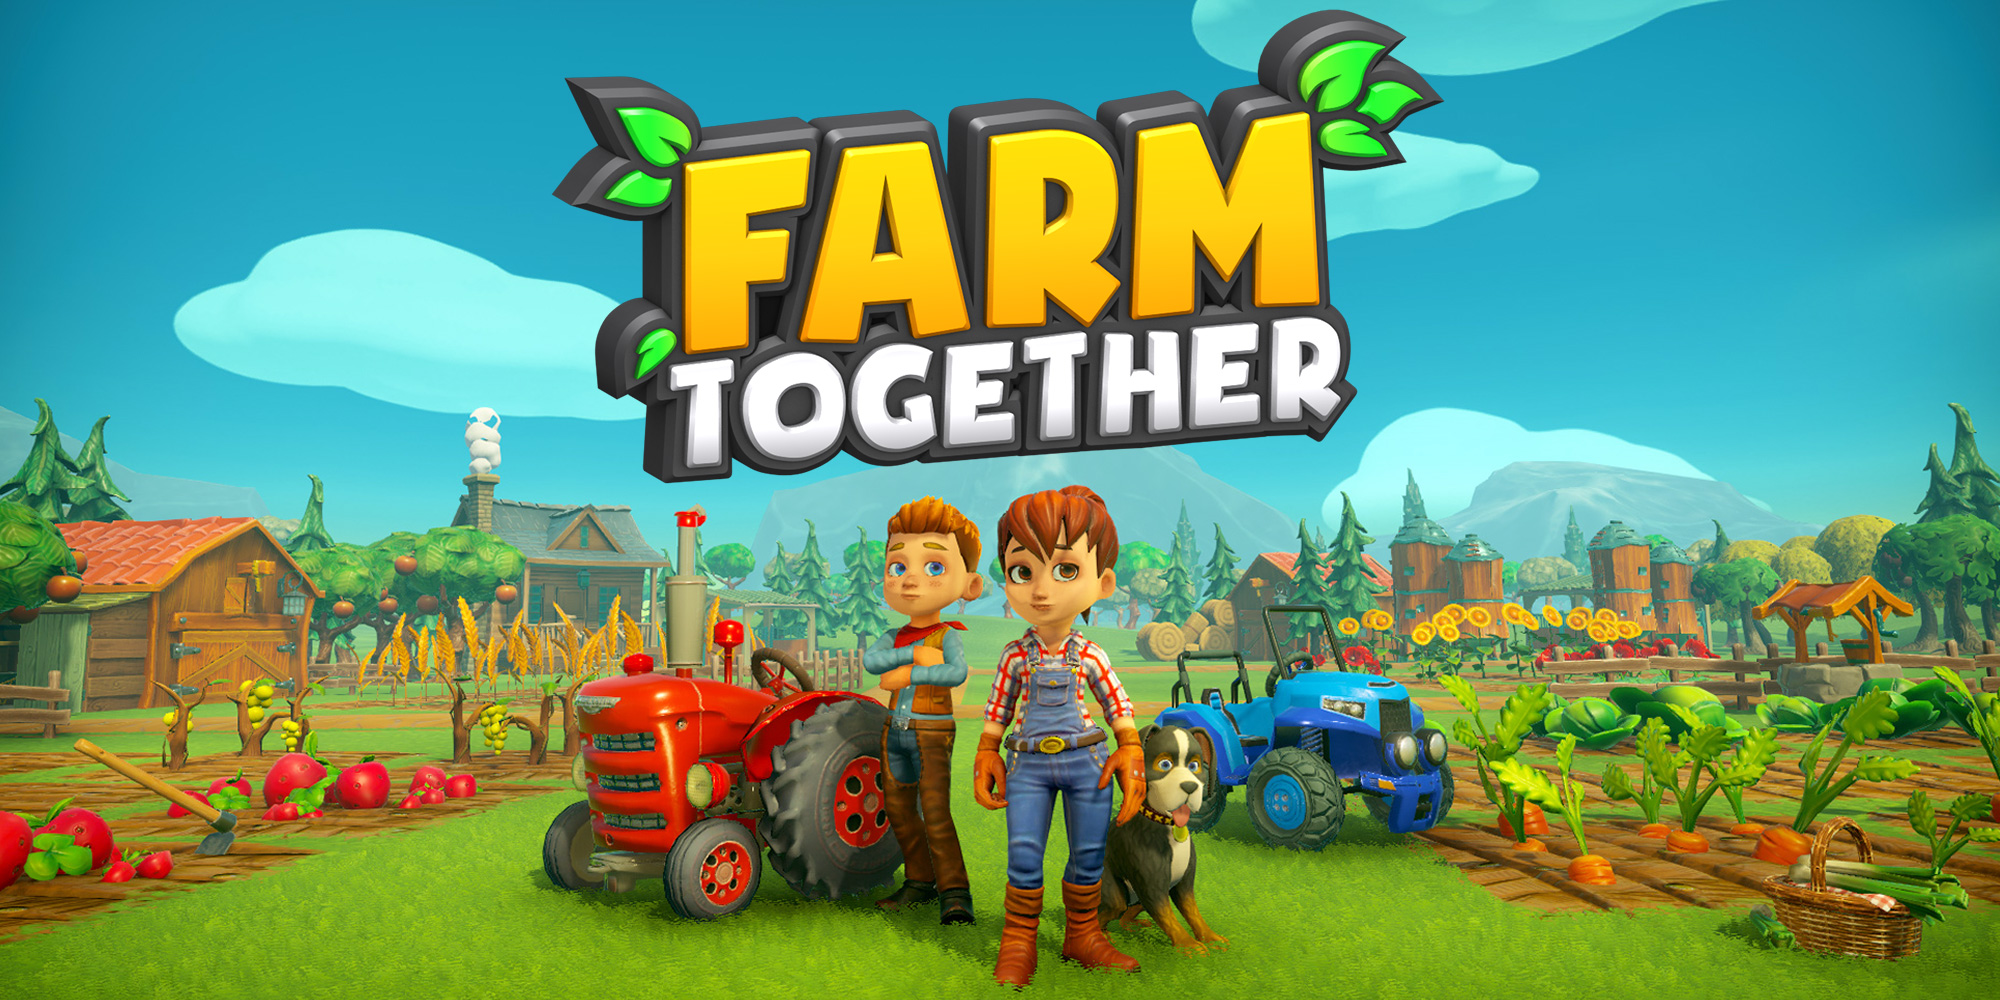 plek doel slim Farm Together | Nintendo Switch download software | Games | Nintendo